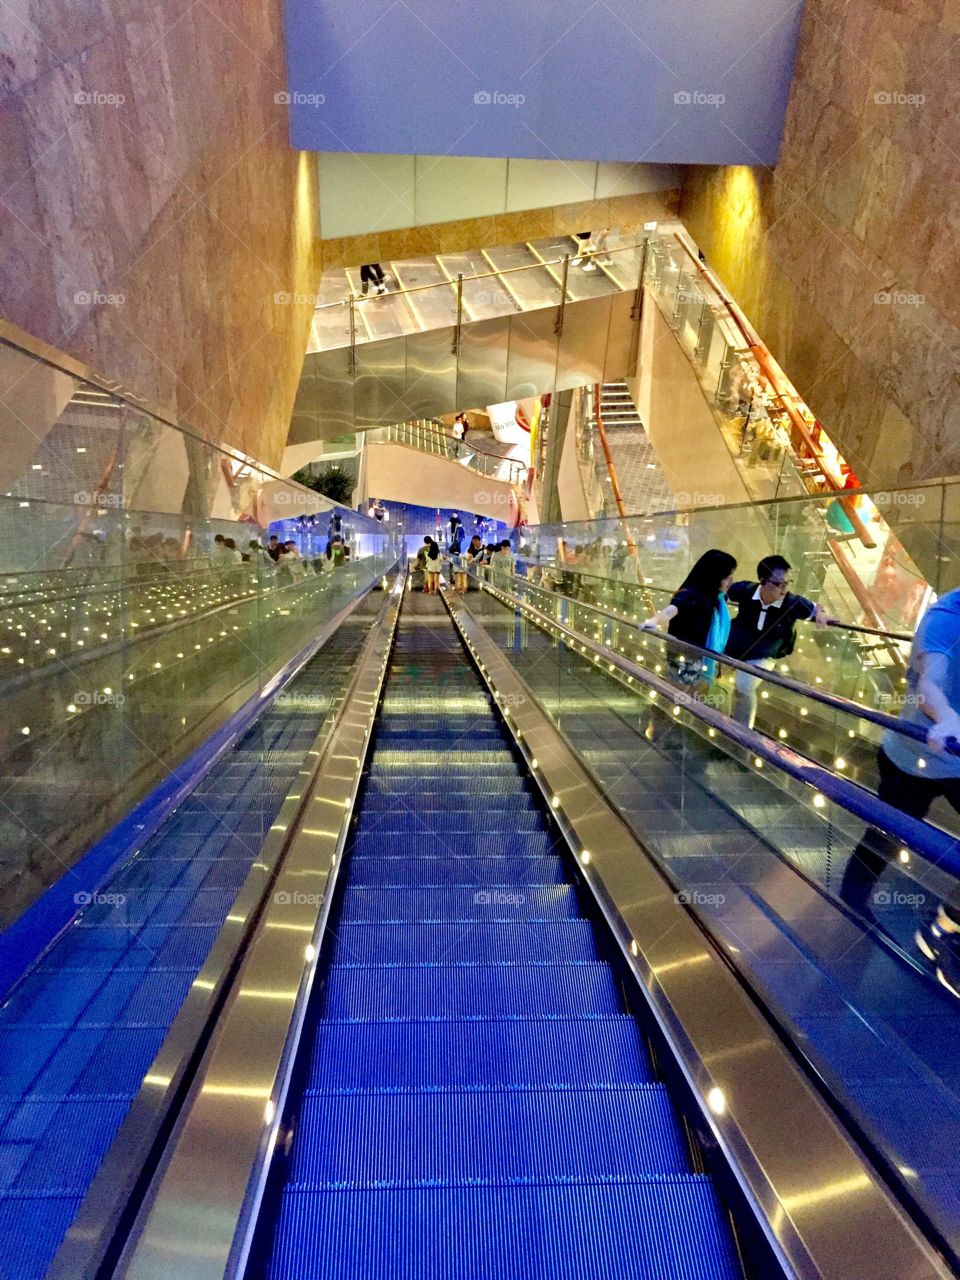 Escalator to heaven- Hong Kong shopping mall escalator 